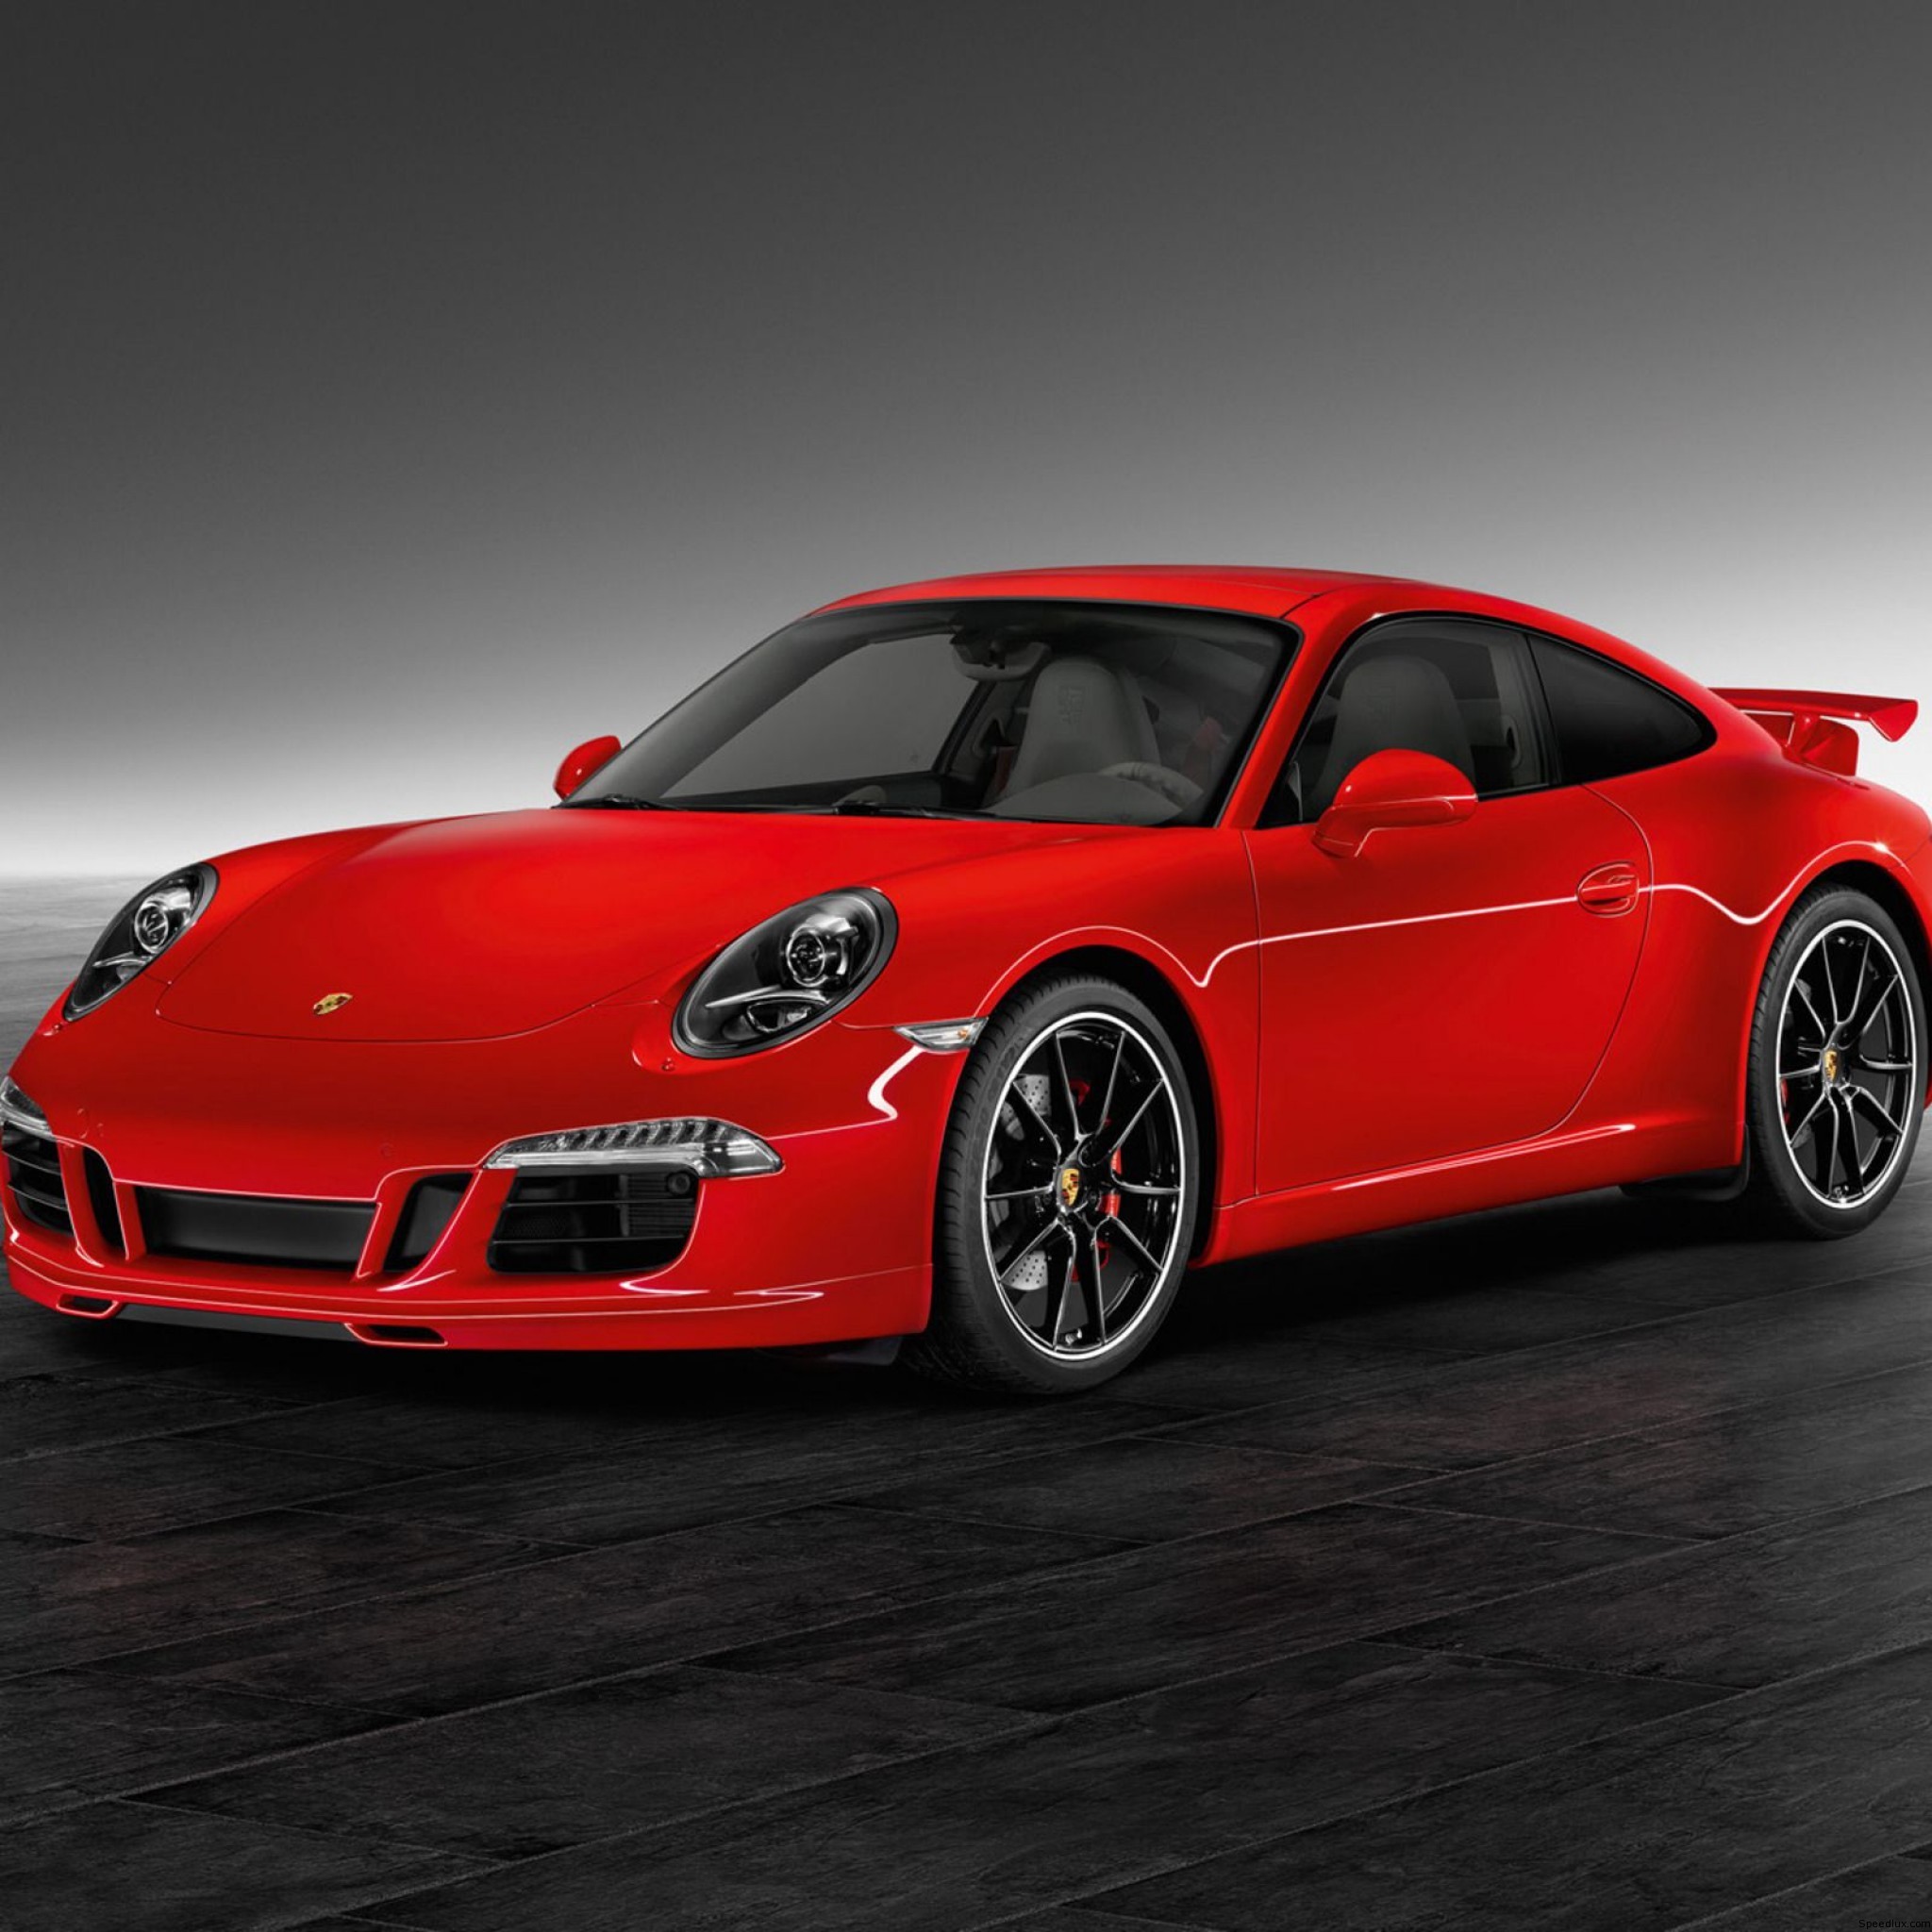 TopCar Porsche 911 Carrera Stinger announced